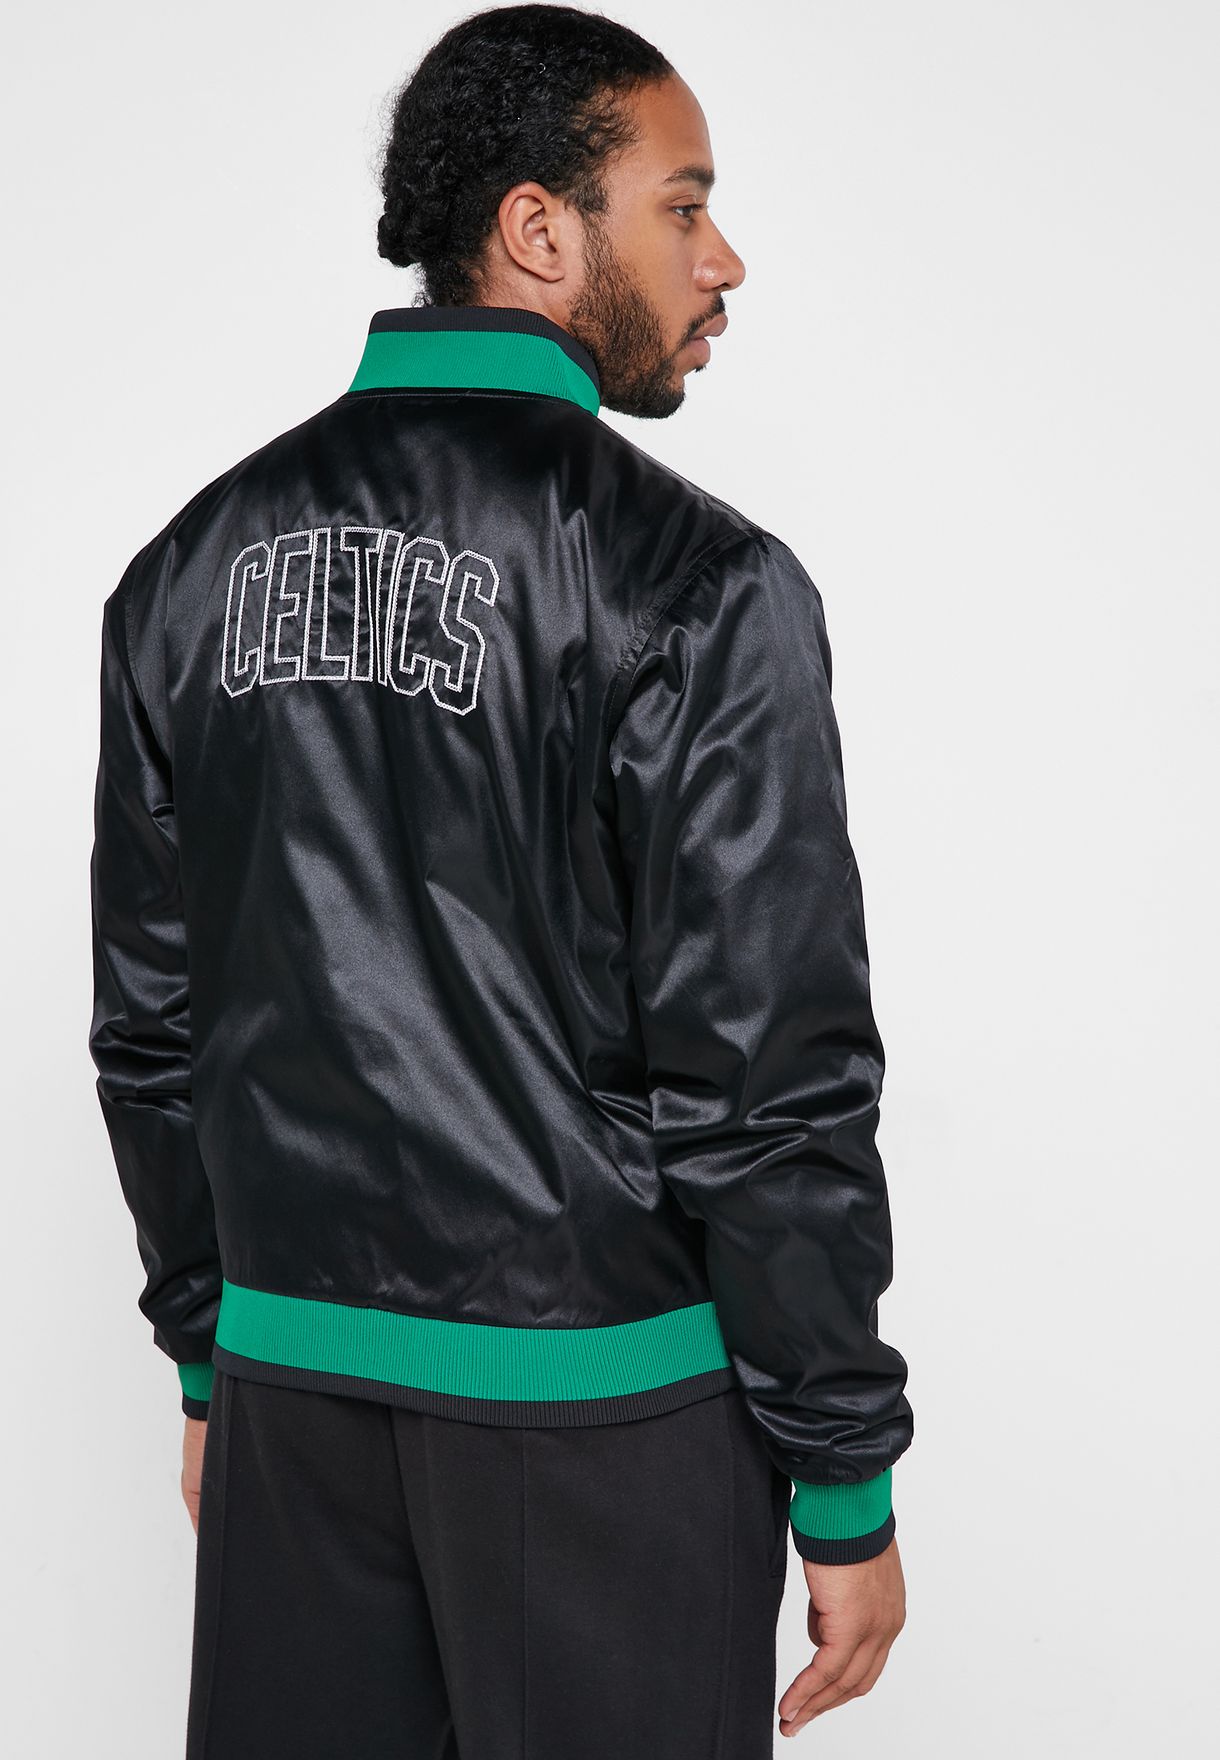 celtic jackets for sale